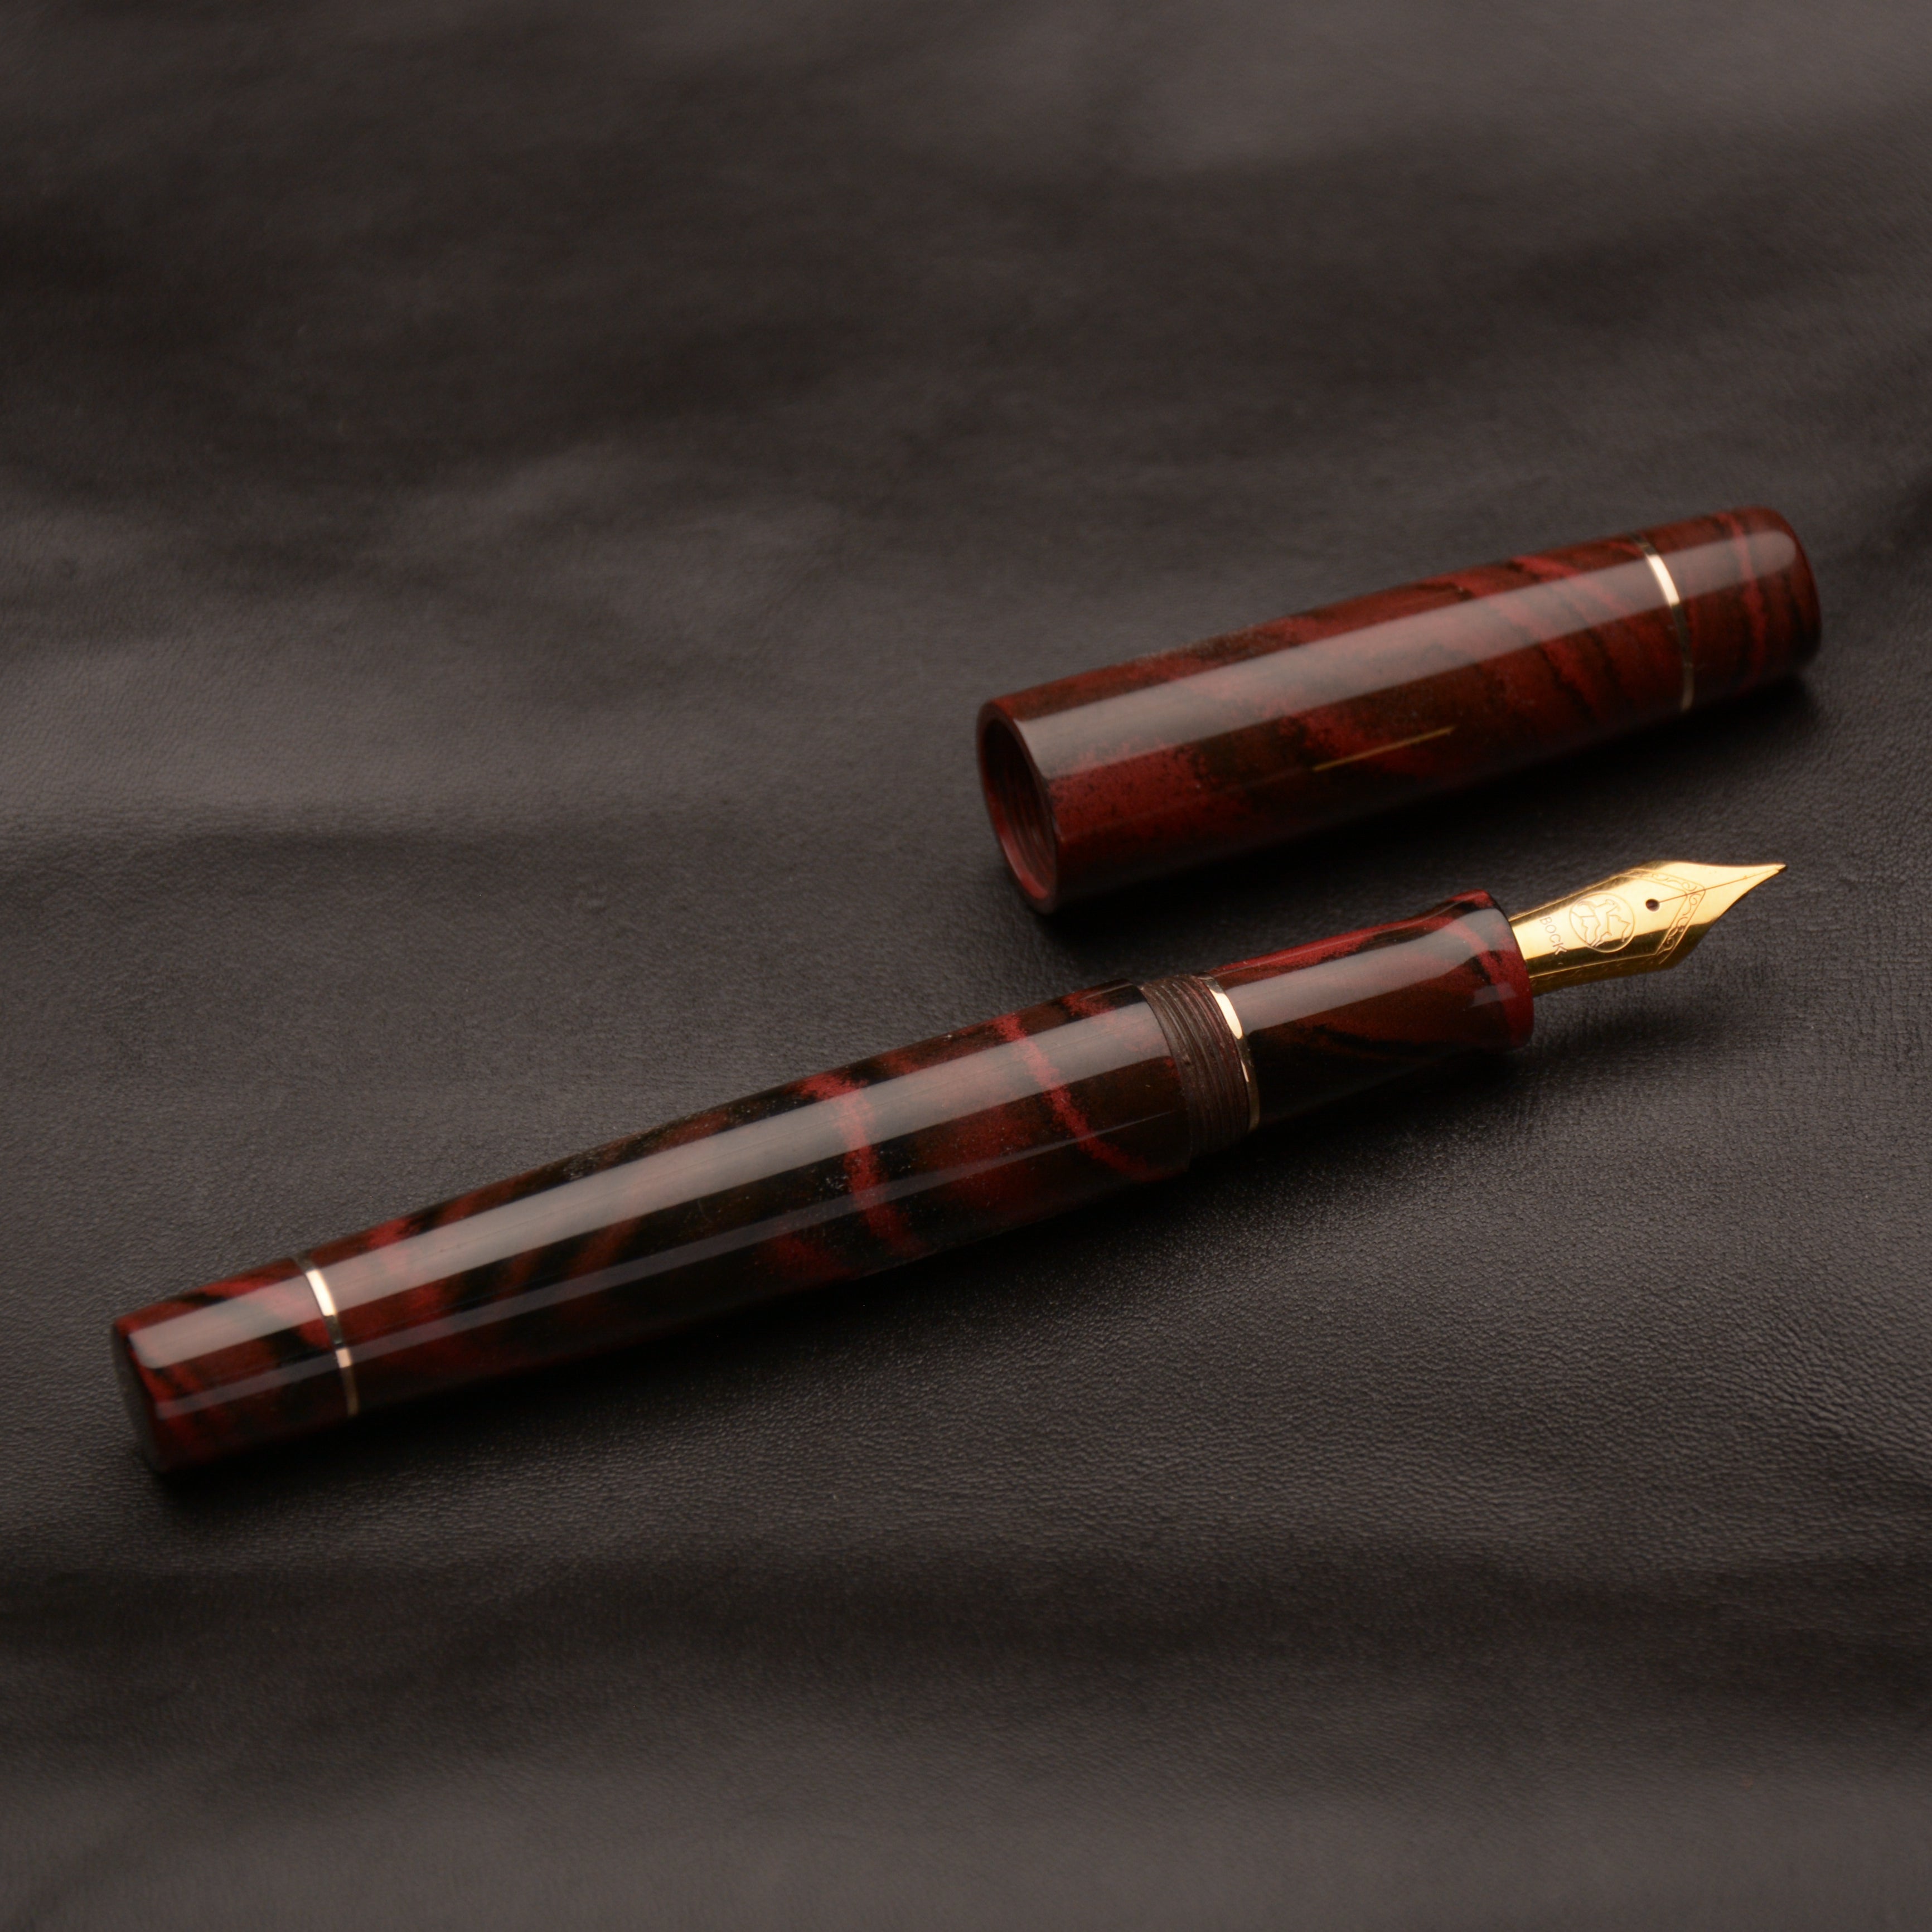 Fountain Pen - Bock #6 - 14 mm - Nikko Red Ebonite with Bronze details